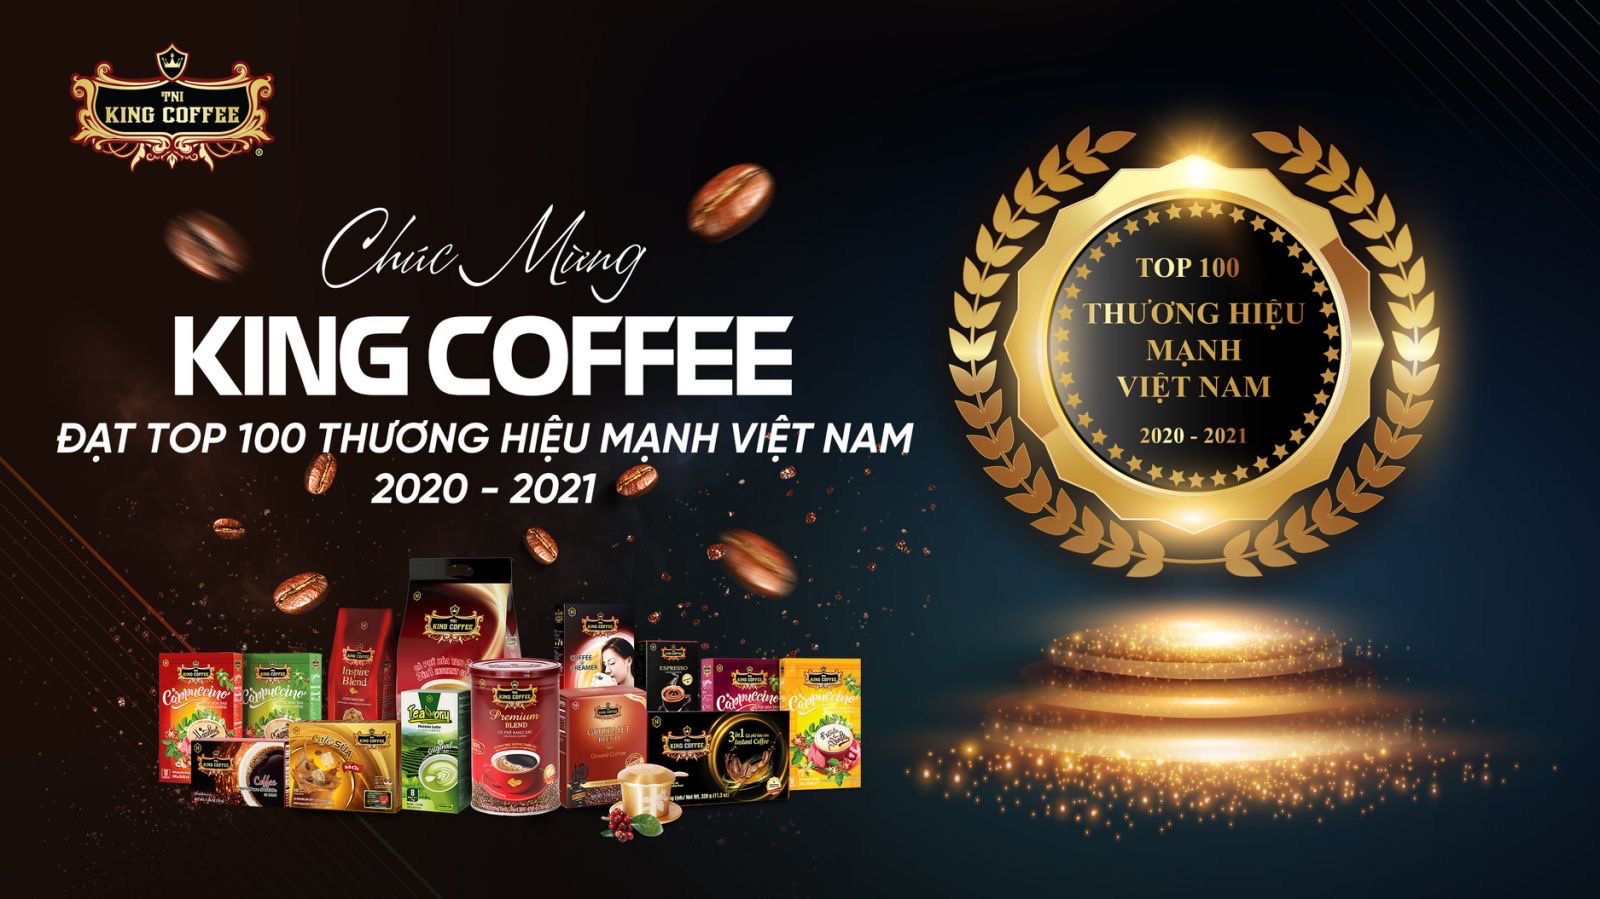 king coffee top 100 thuong hieu manh viet nam